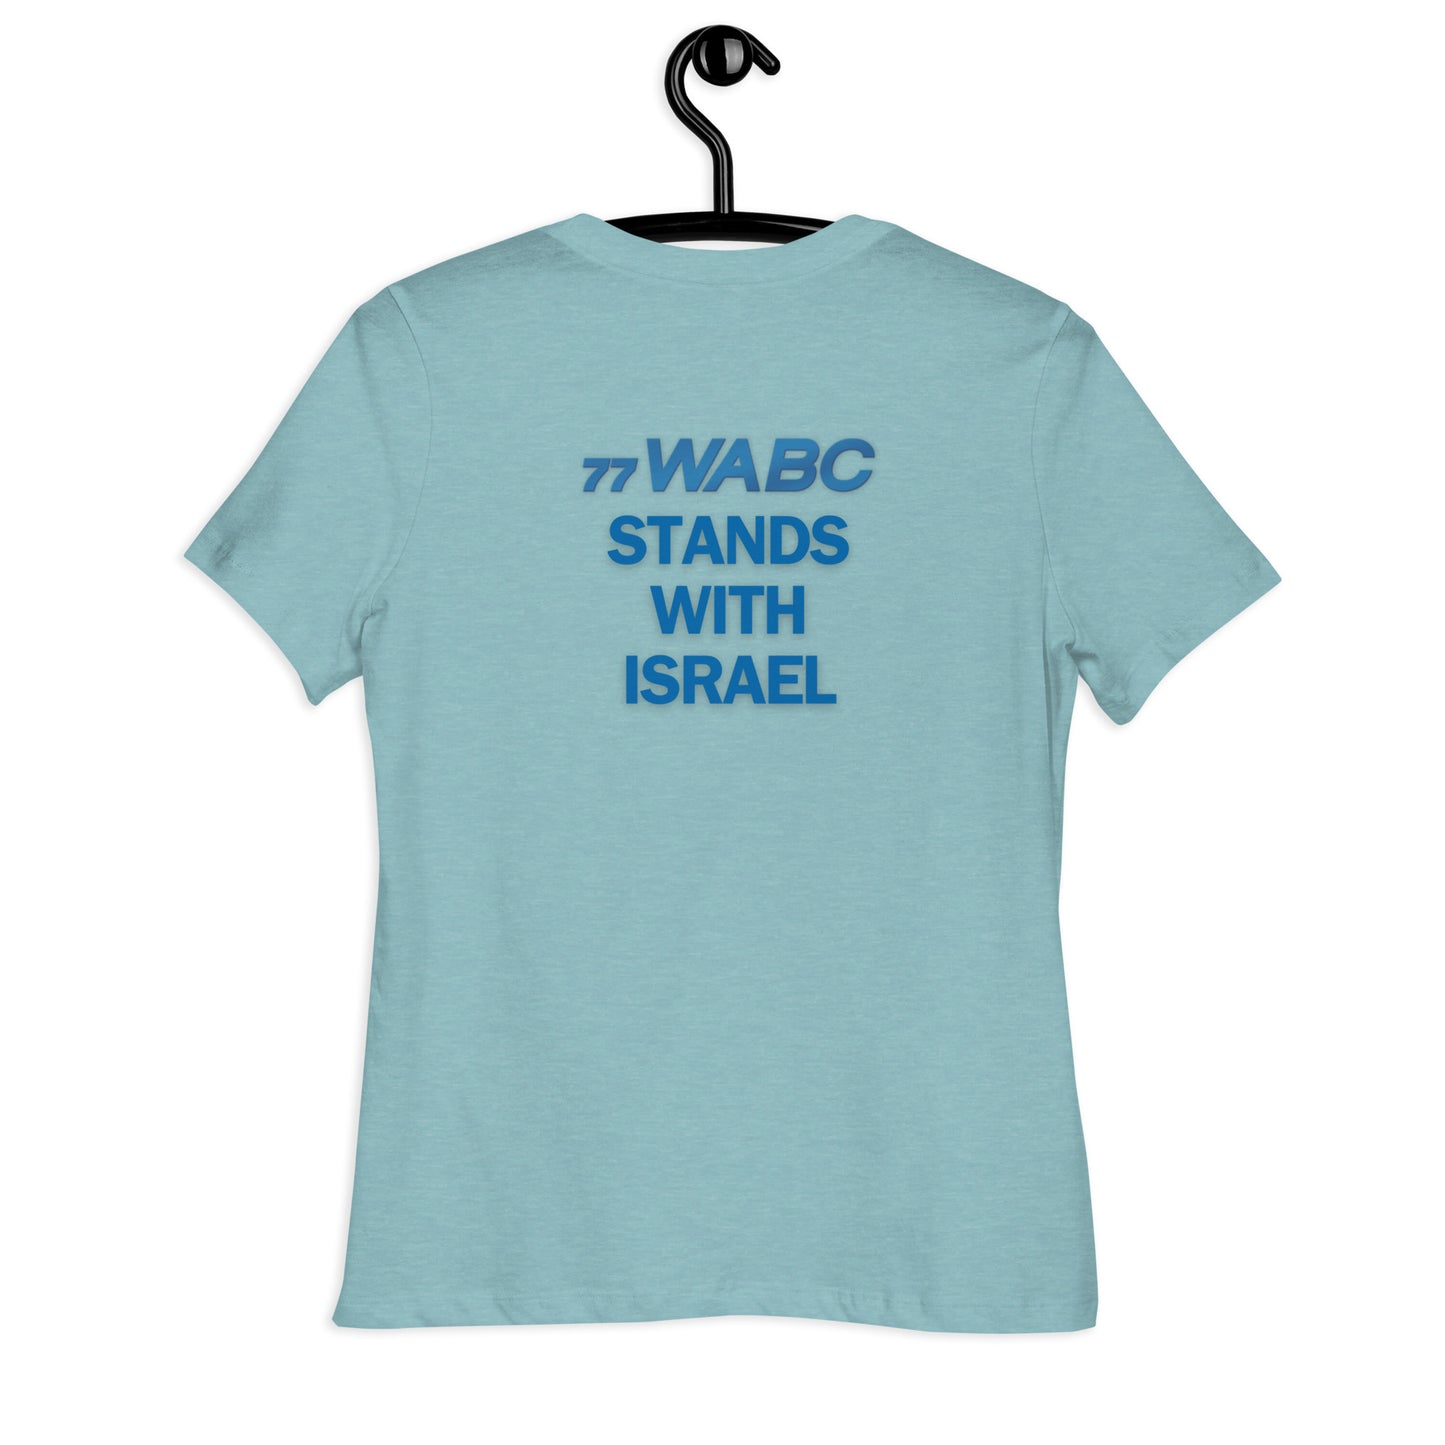 S&FM Israel Trip Women's Relaxed T-Shirt